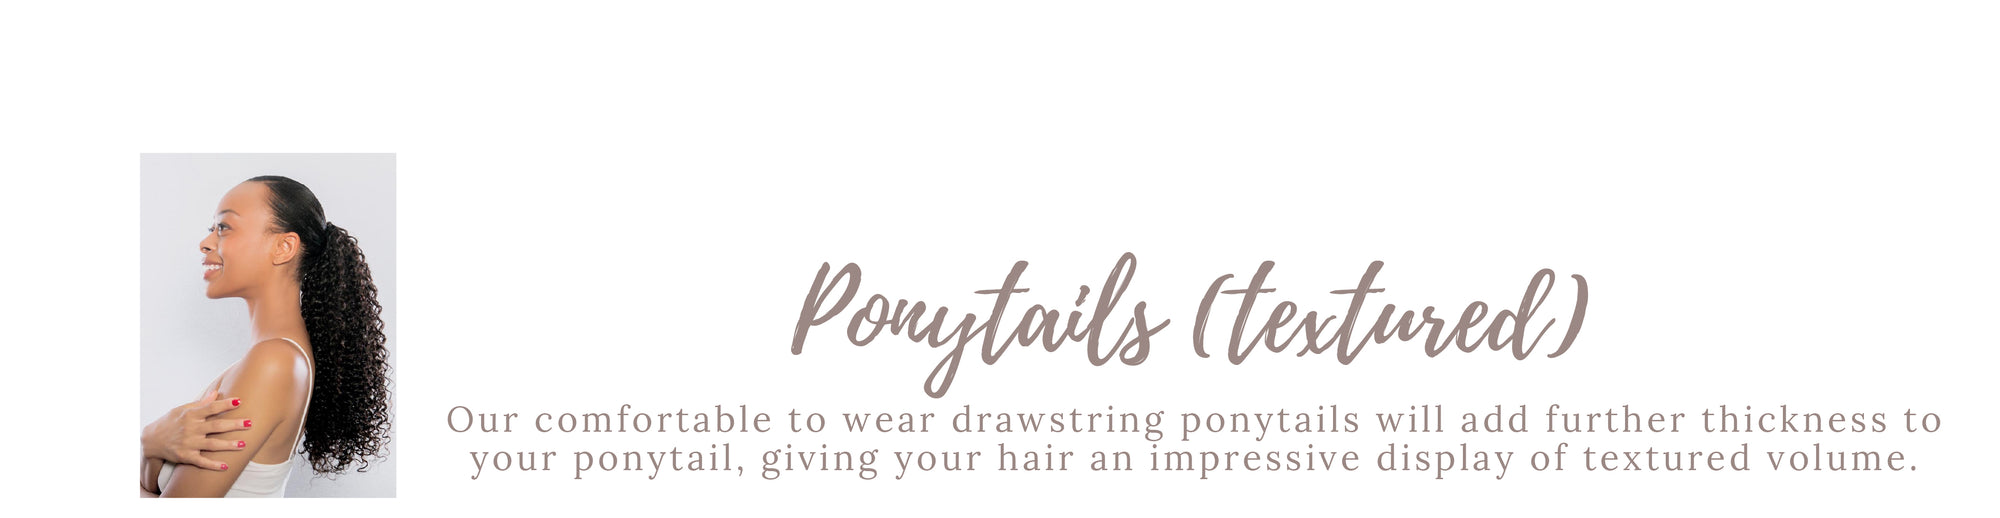 Textured Ponytail